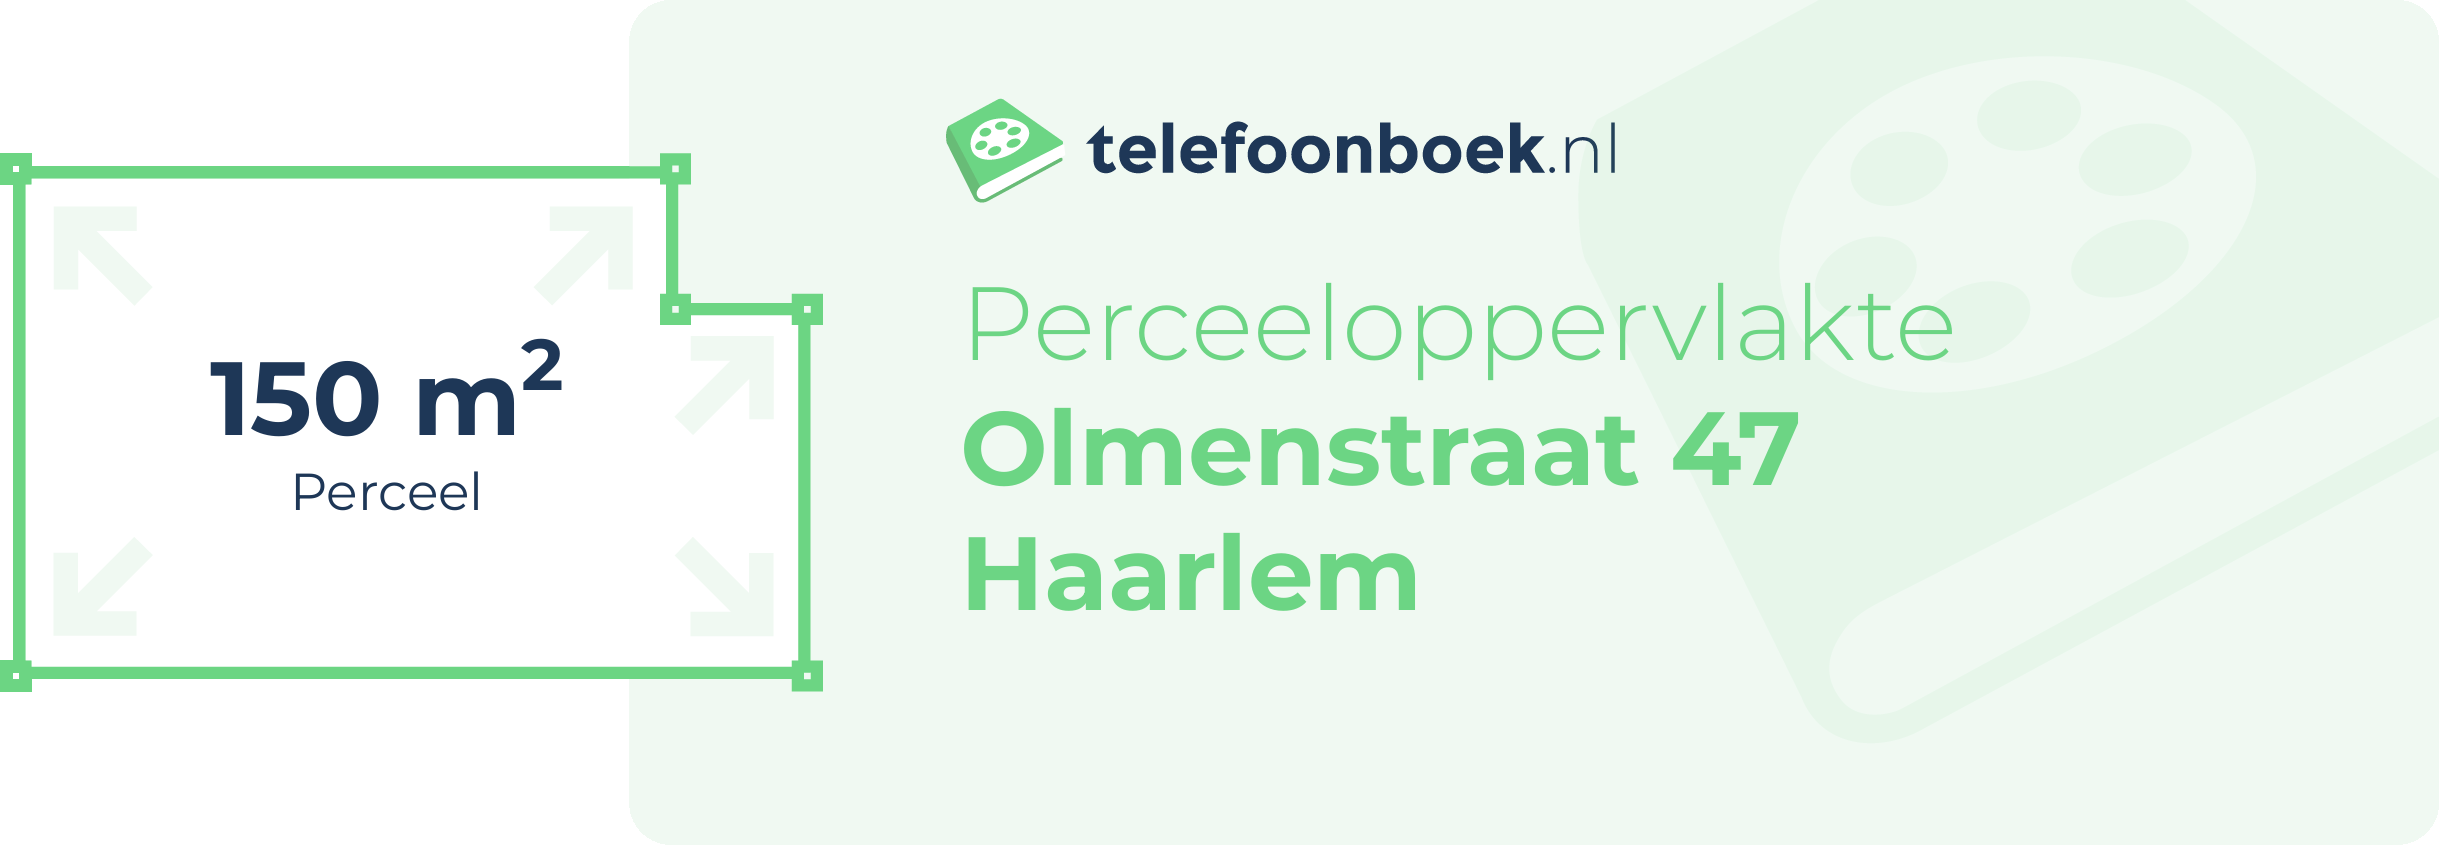 Perceeloppervlakte Olmenstraat 47 Haarlem